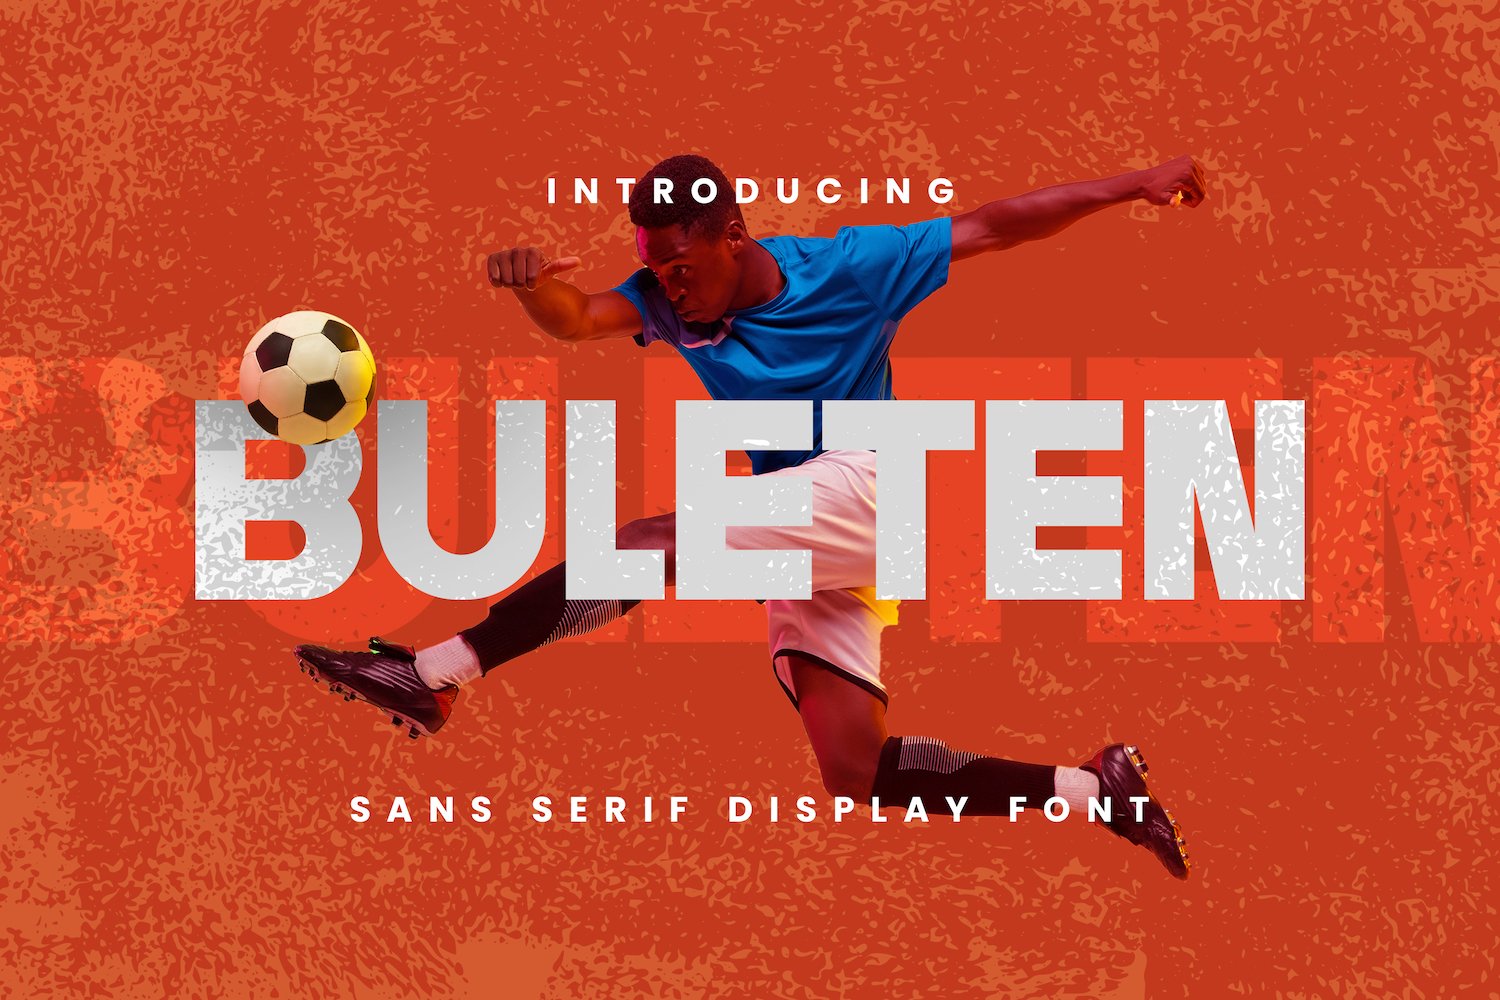 Buleten - Sans Serif Font cover image.